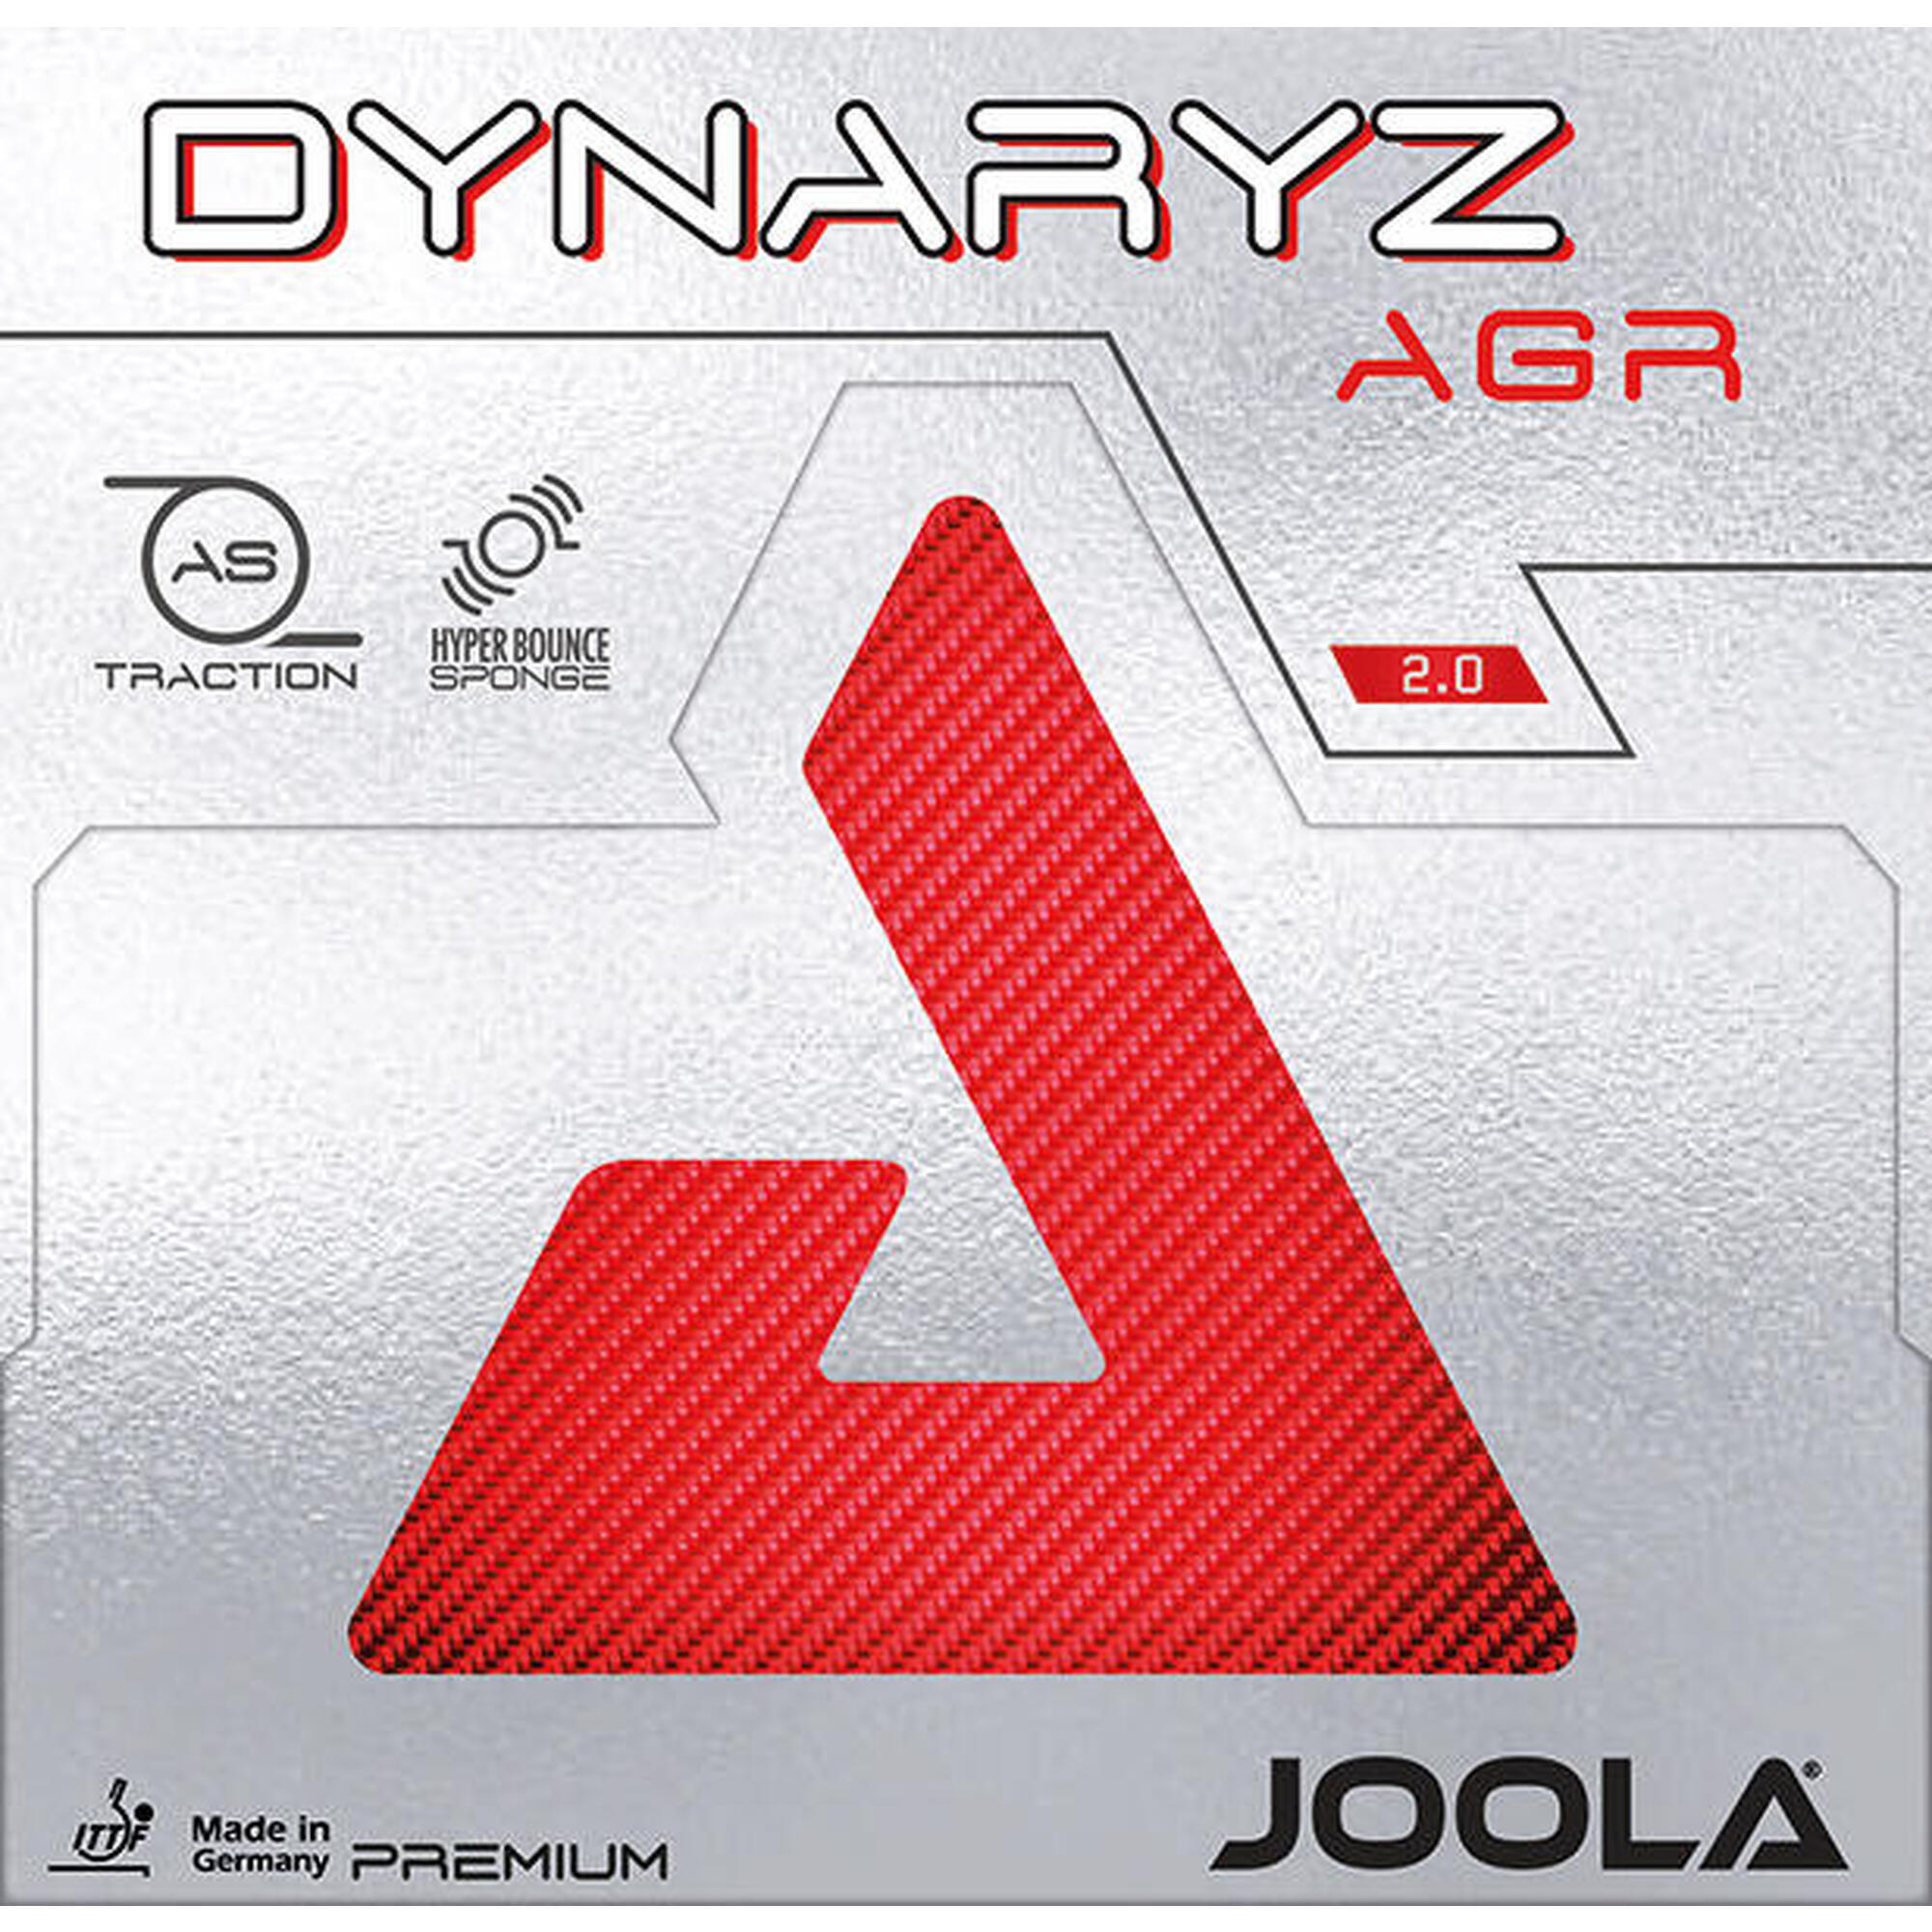 Joola Dynaryz AGR Table Tennis Rubber 1/5